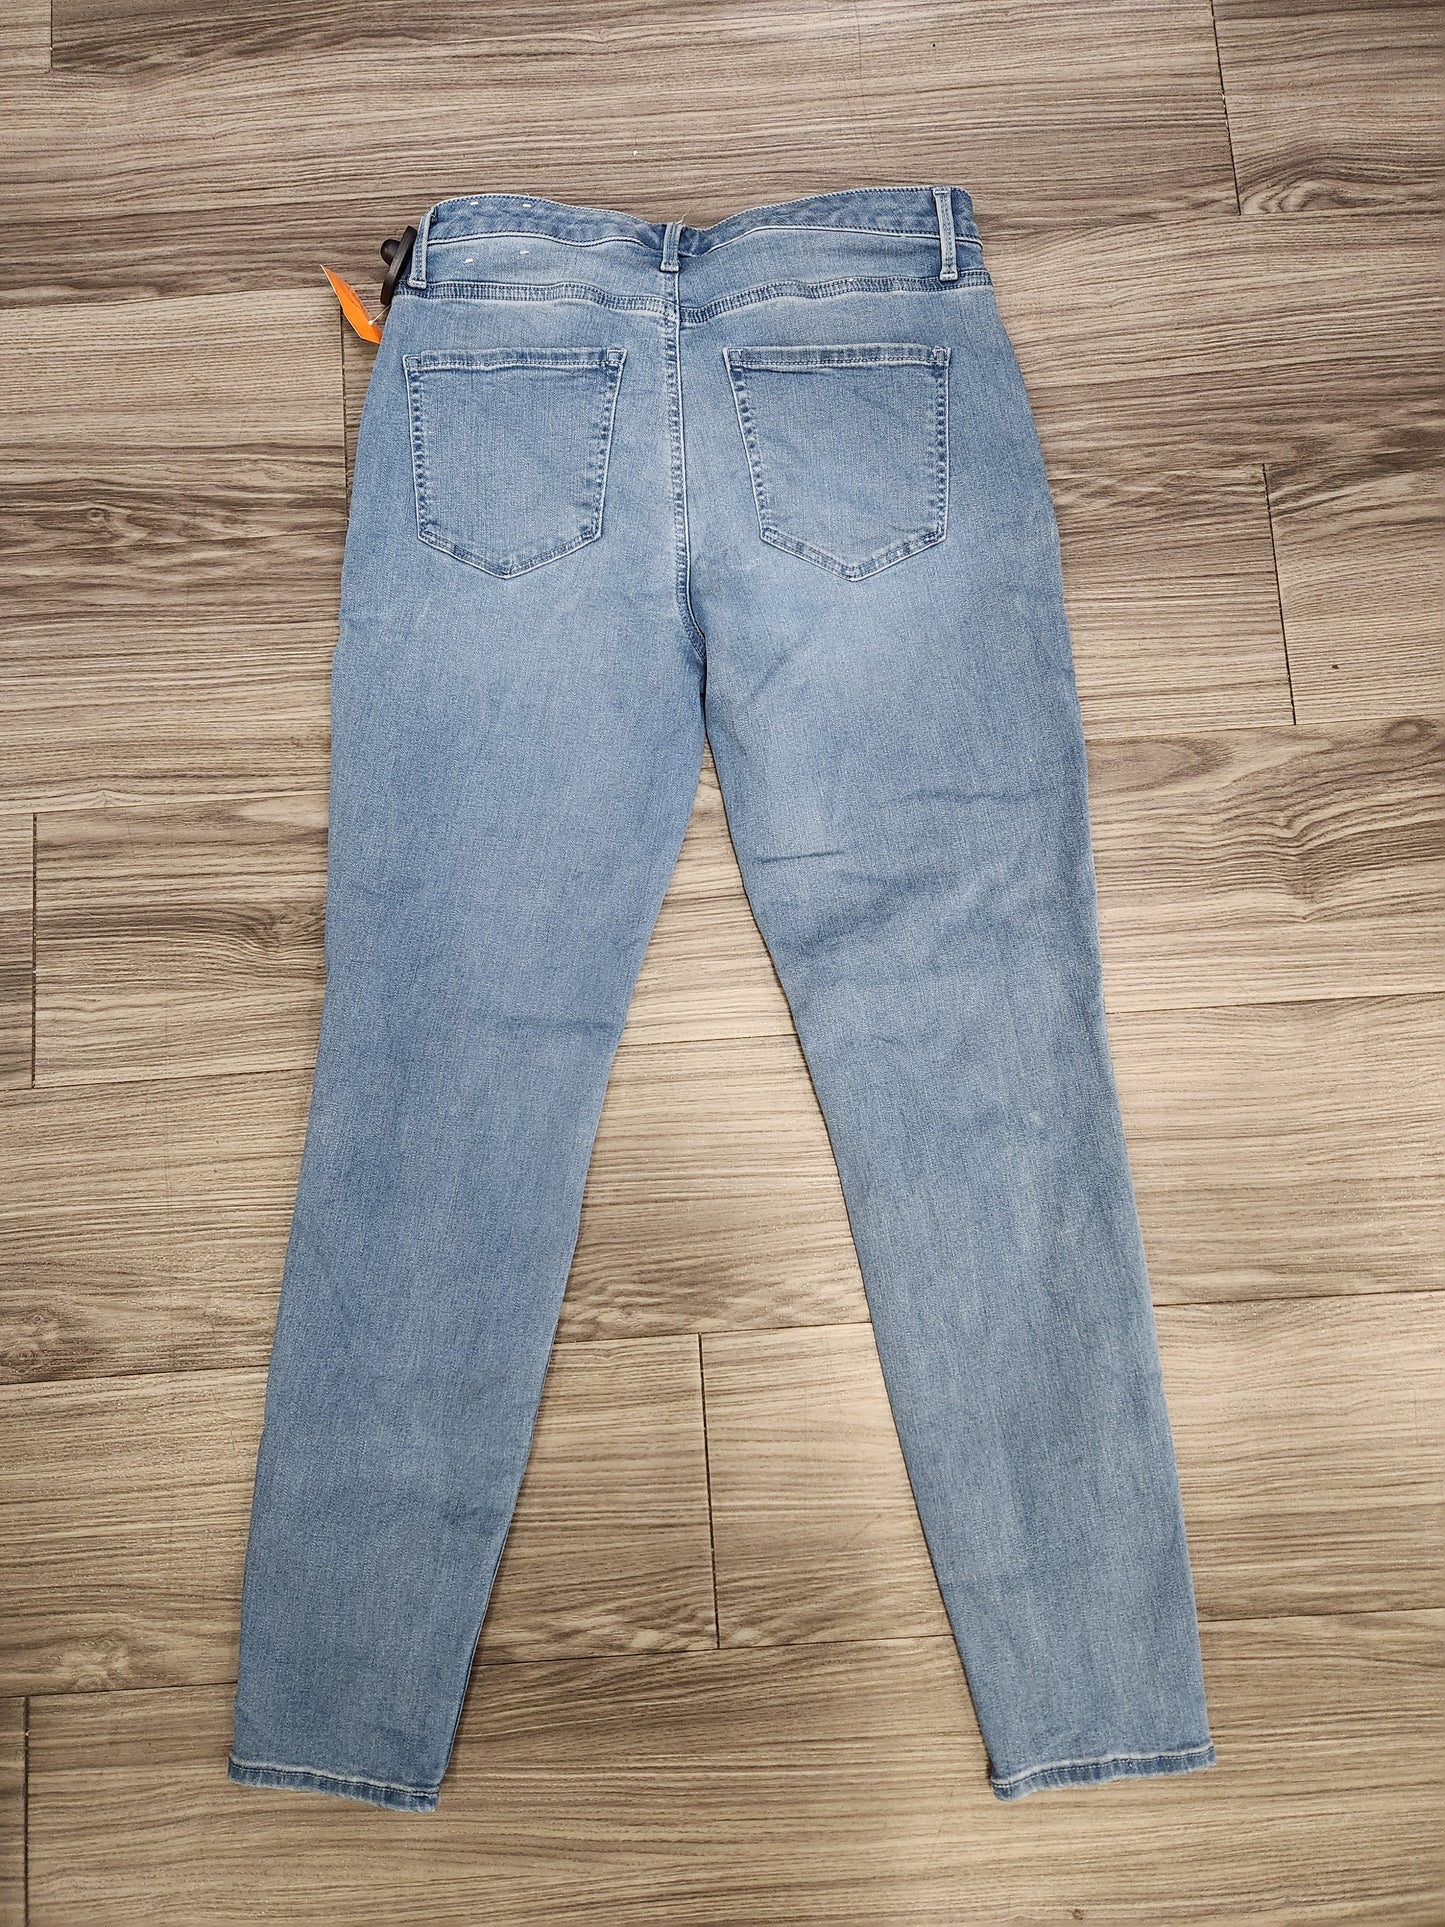 Jeans Skinny By Talbots  Size: 6